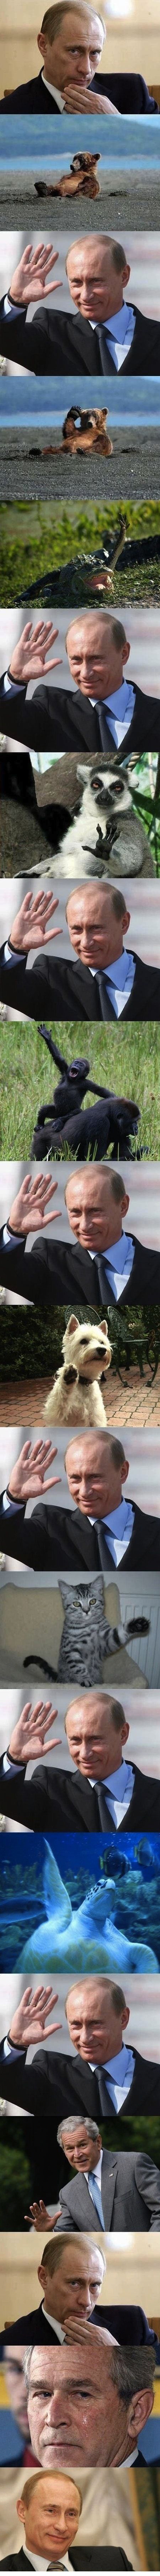 Friendly Putin is friendly.